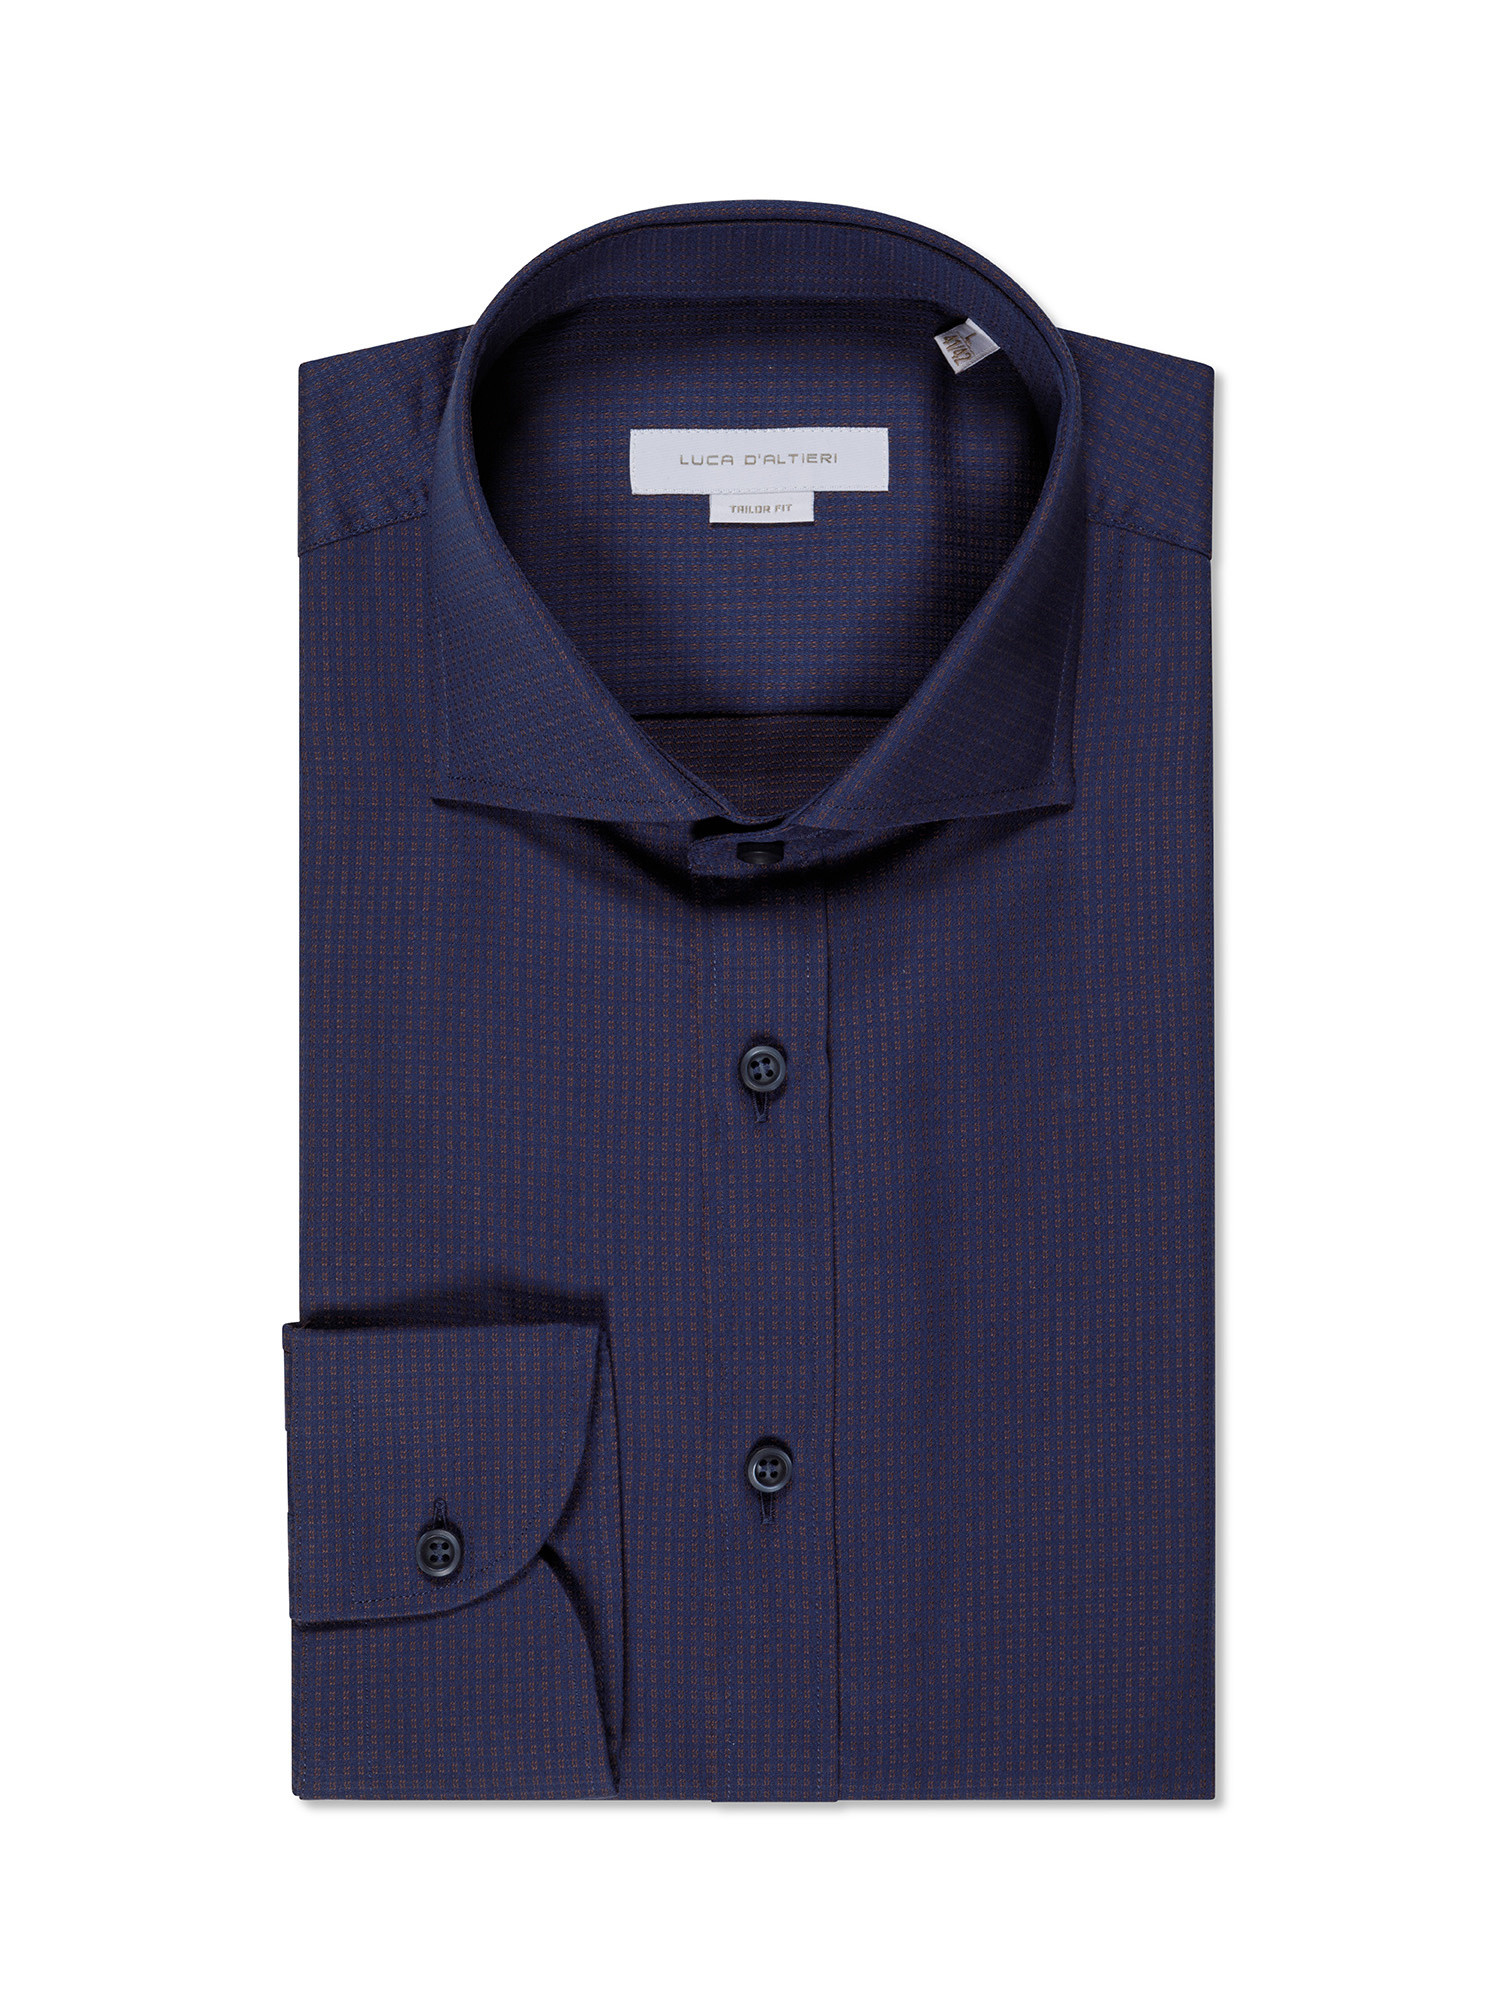 Luca D'Altieri - Tailor fit shirt in pure cotton, Blue 2, large image number 0